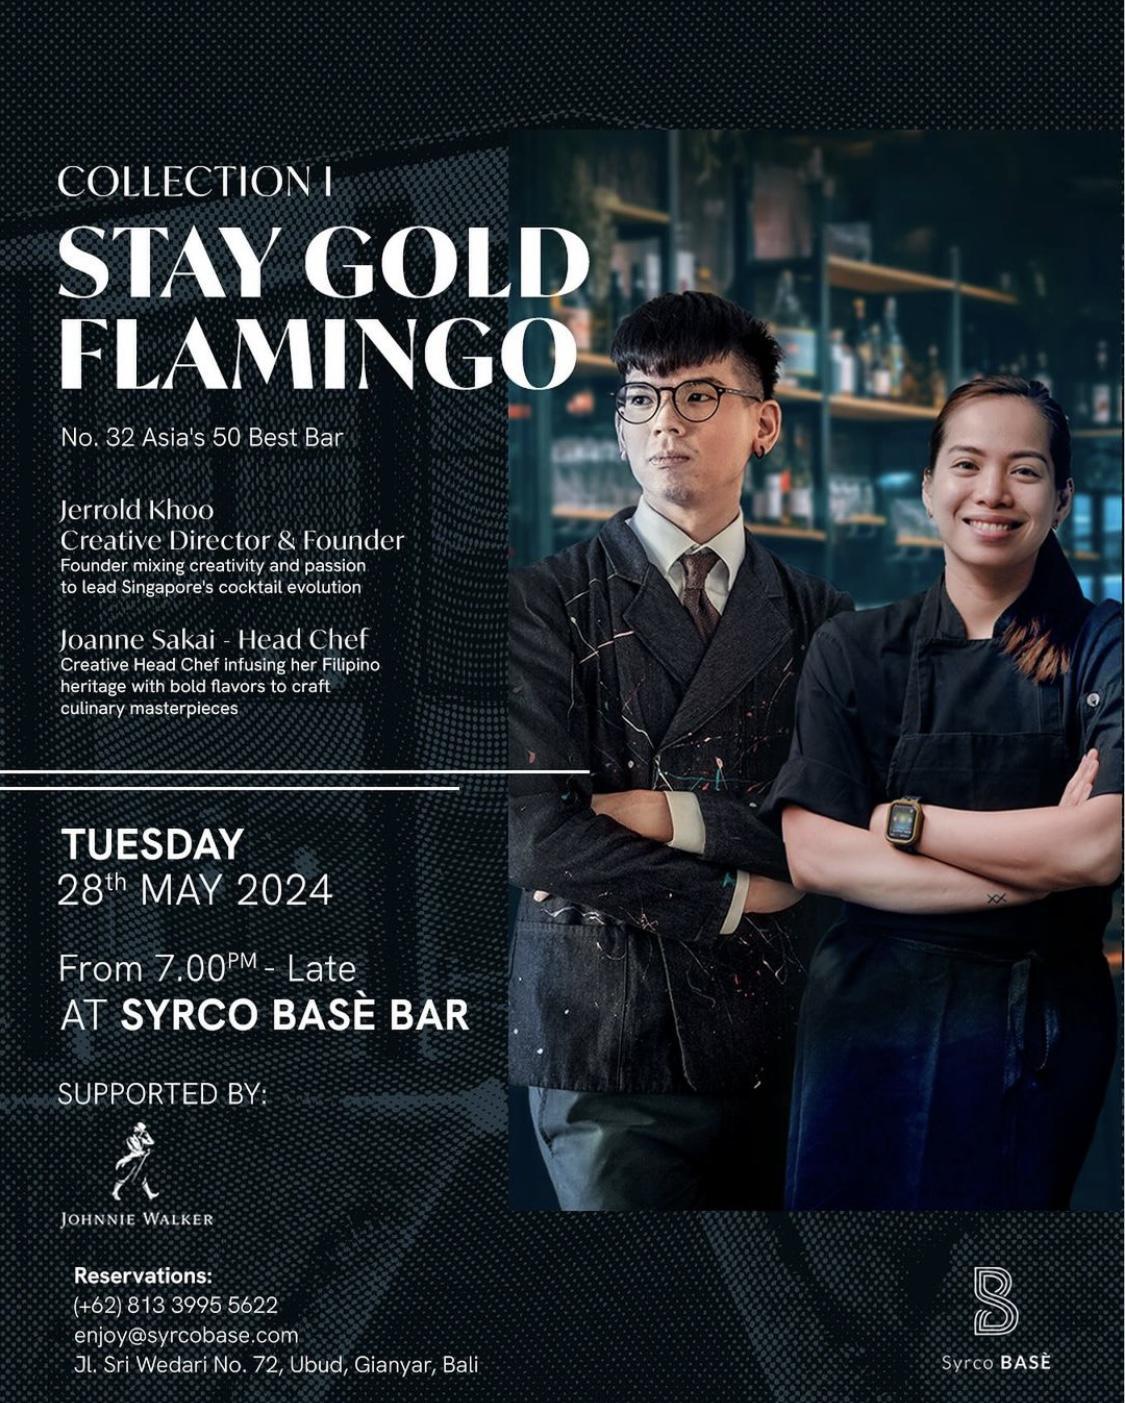 Stay Gold Flamingo at Syrco Base Bar